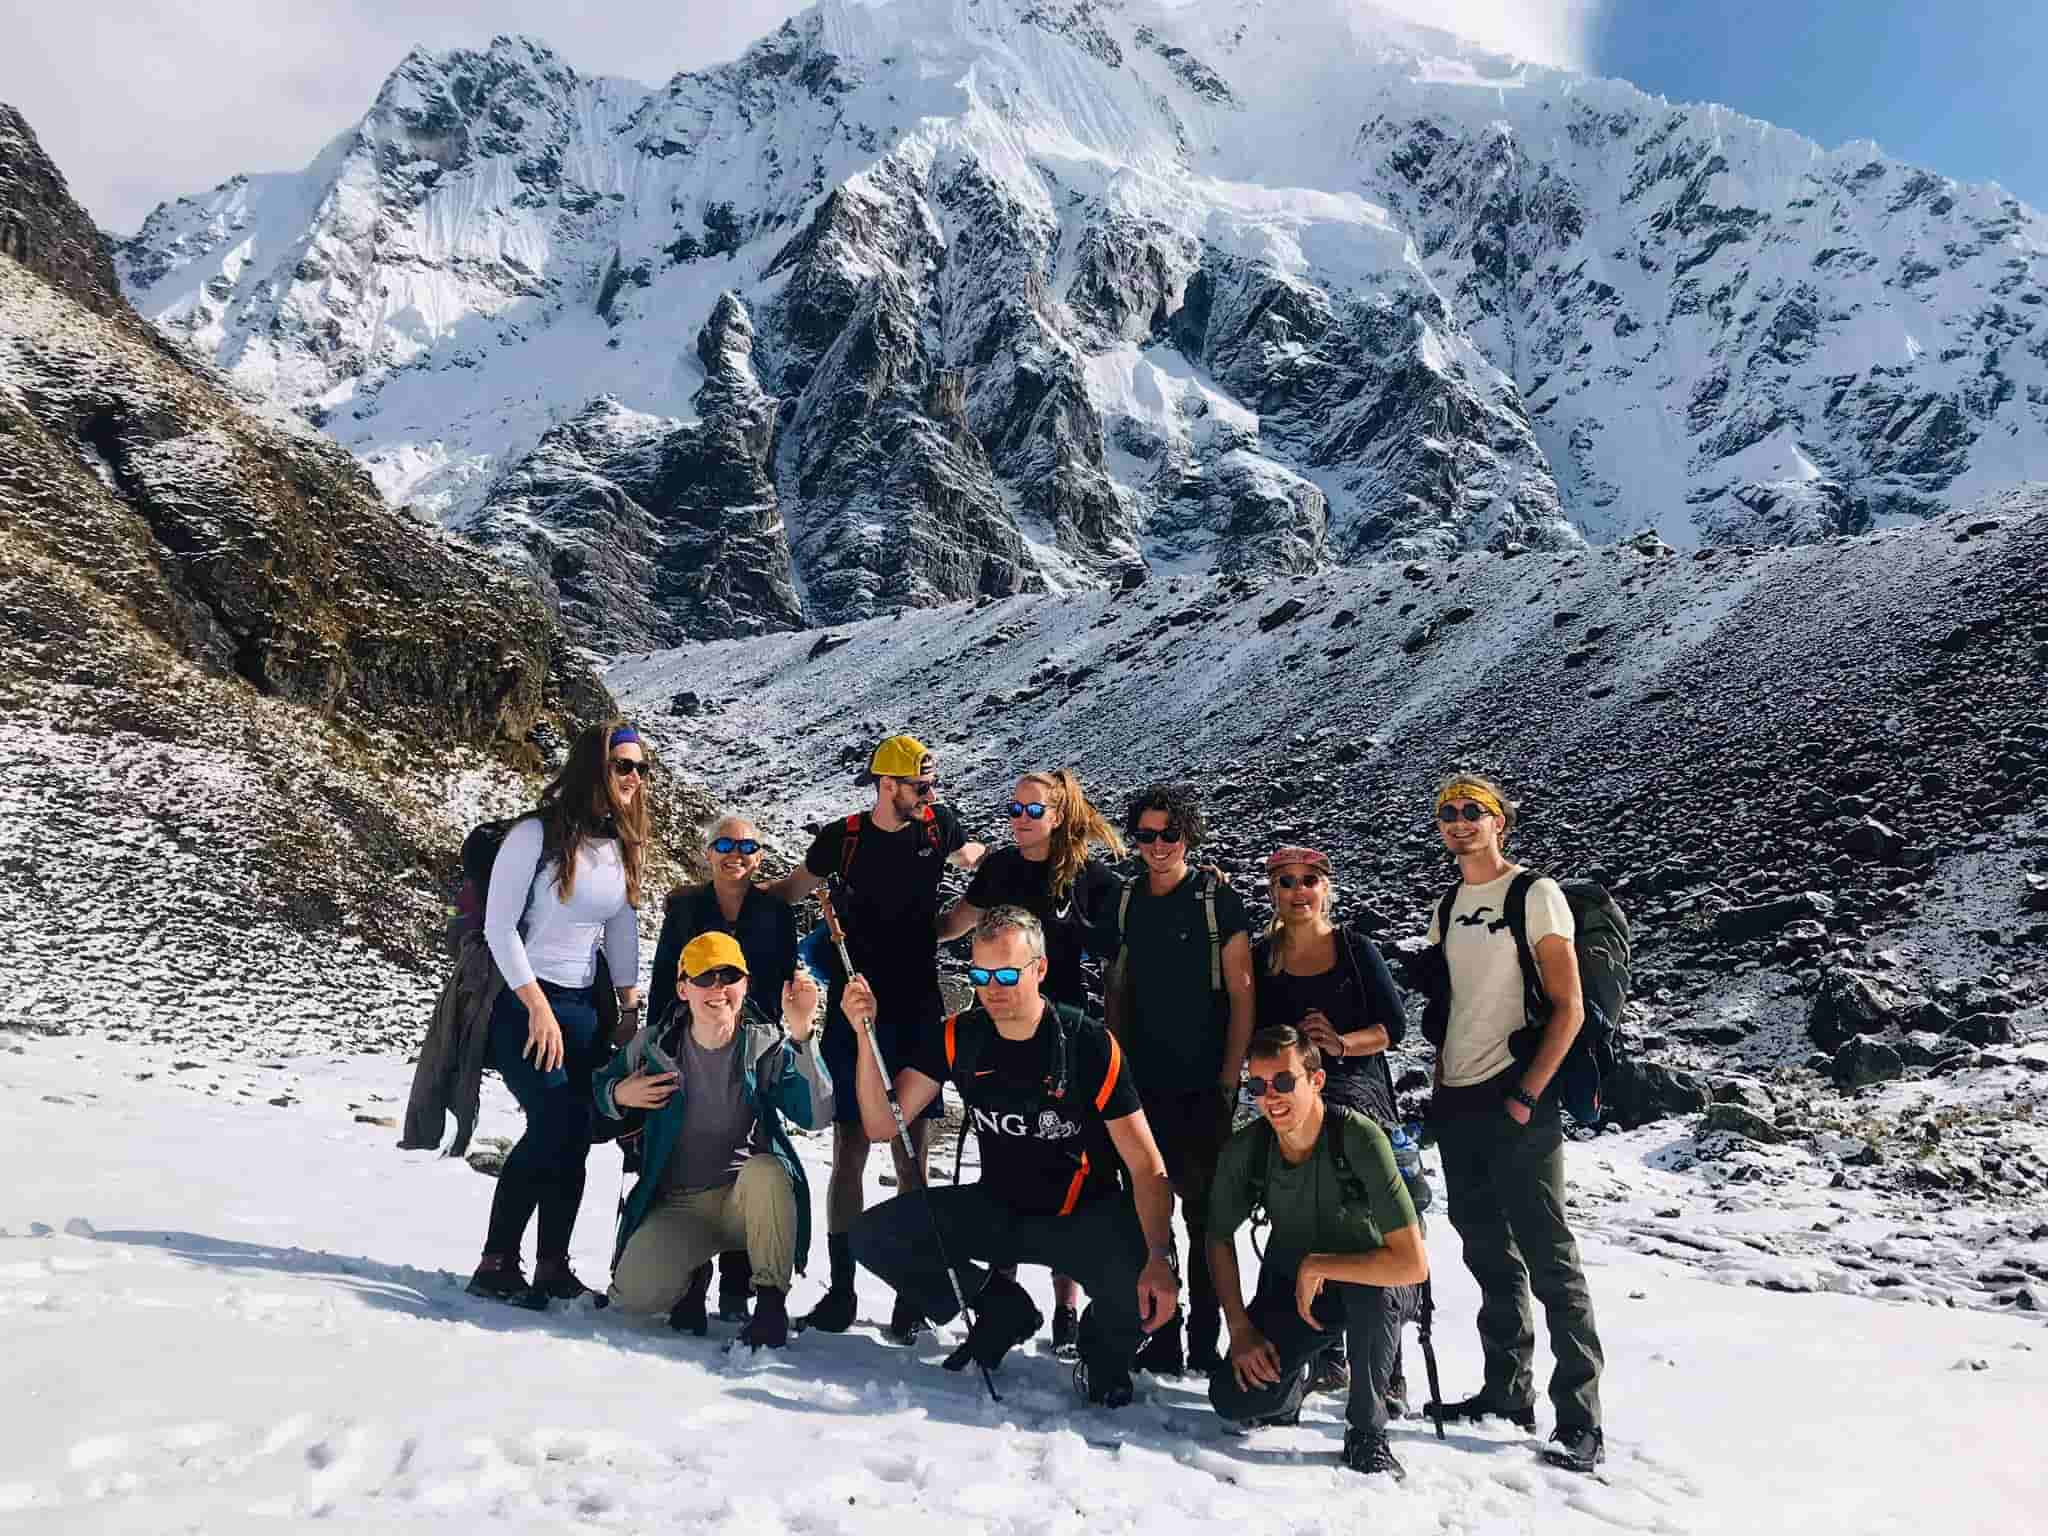 Campsite views during the 4-day Salkantay Trek to Machu Picchu